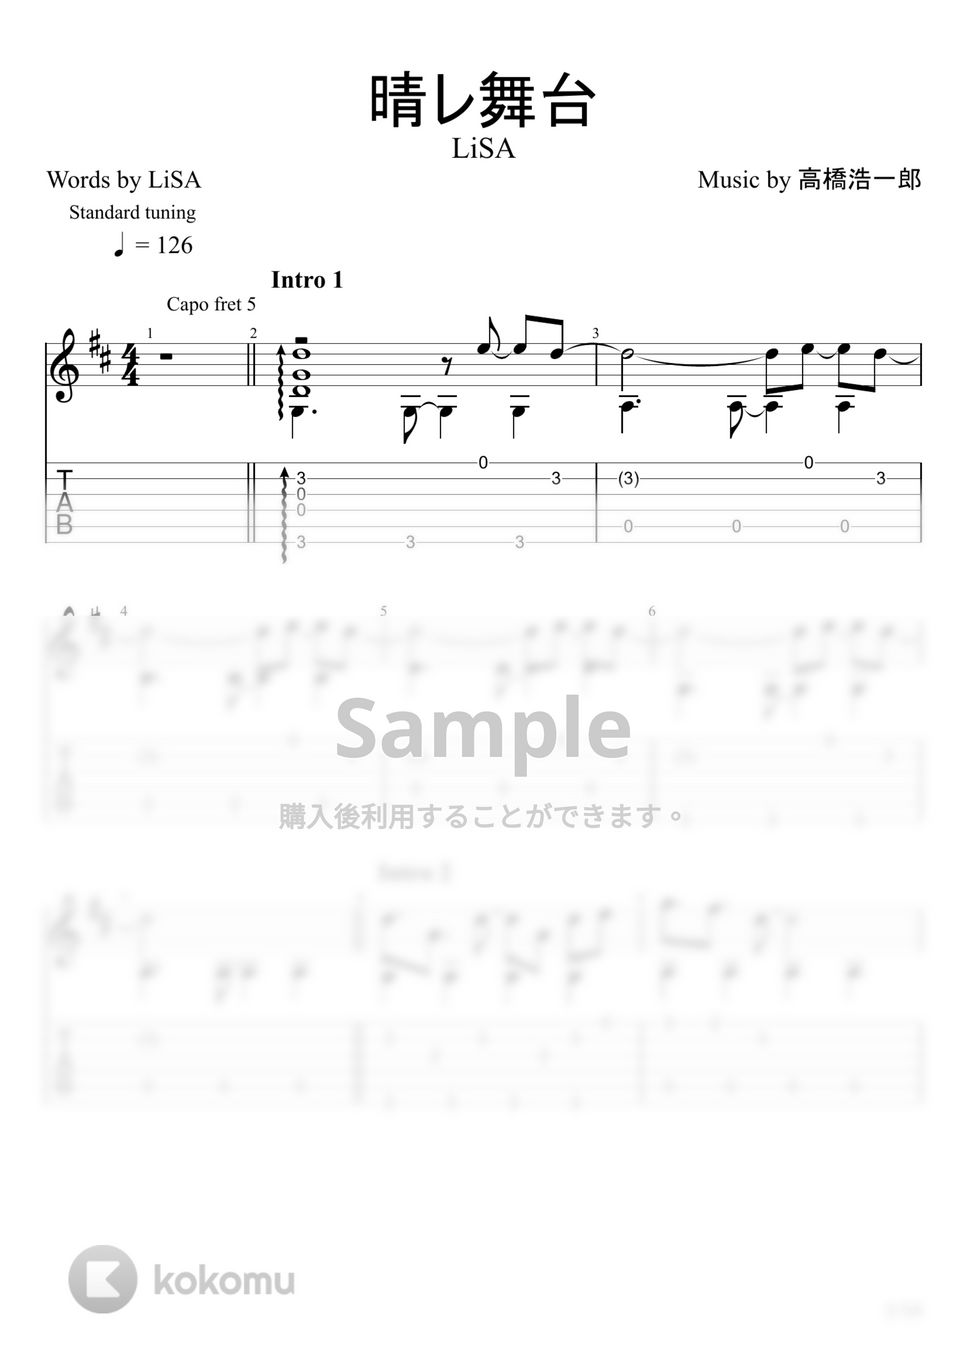 LiSA - 晴レ舞台 (ソロギター) by u3danchou